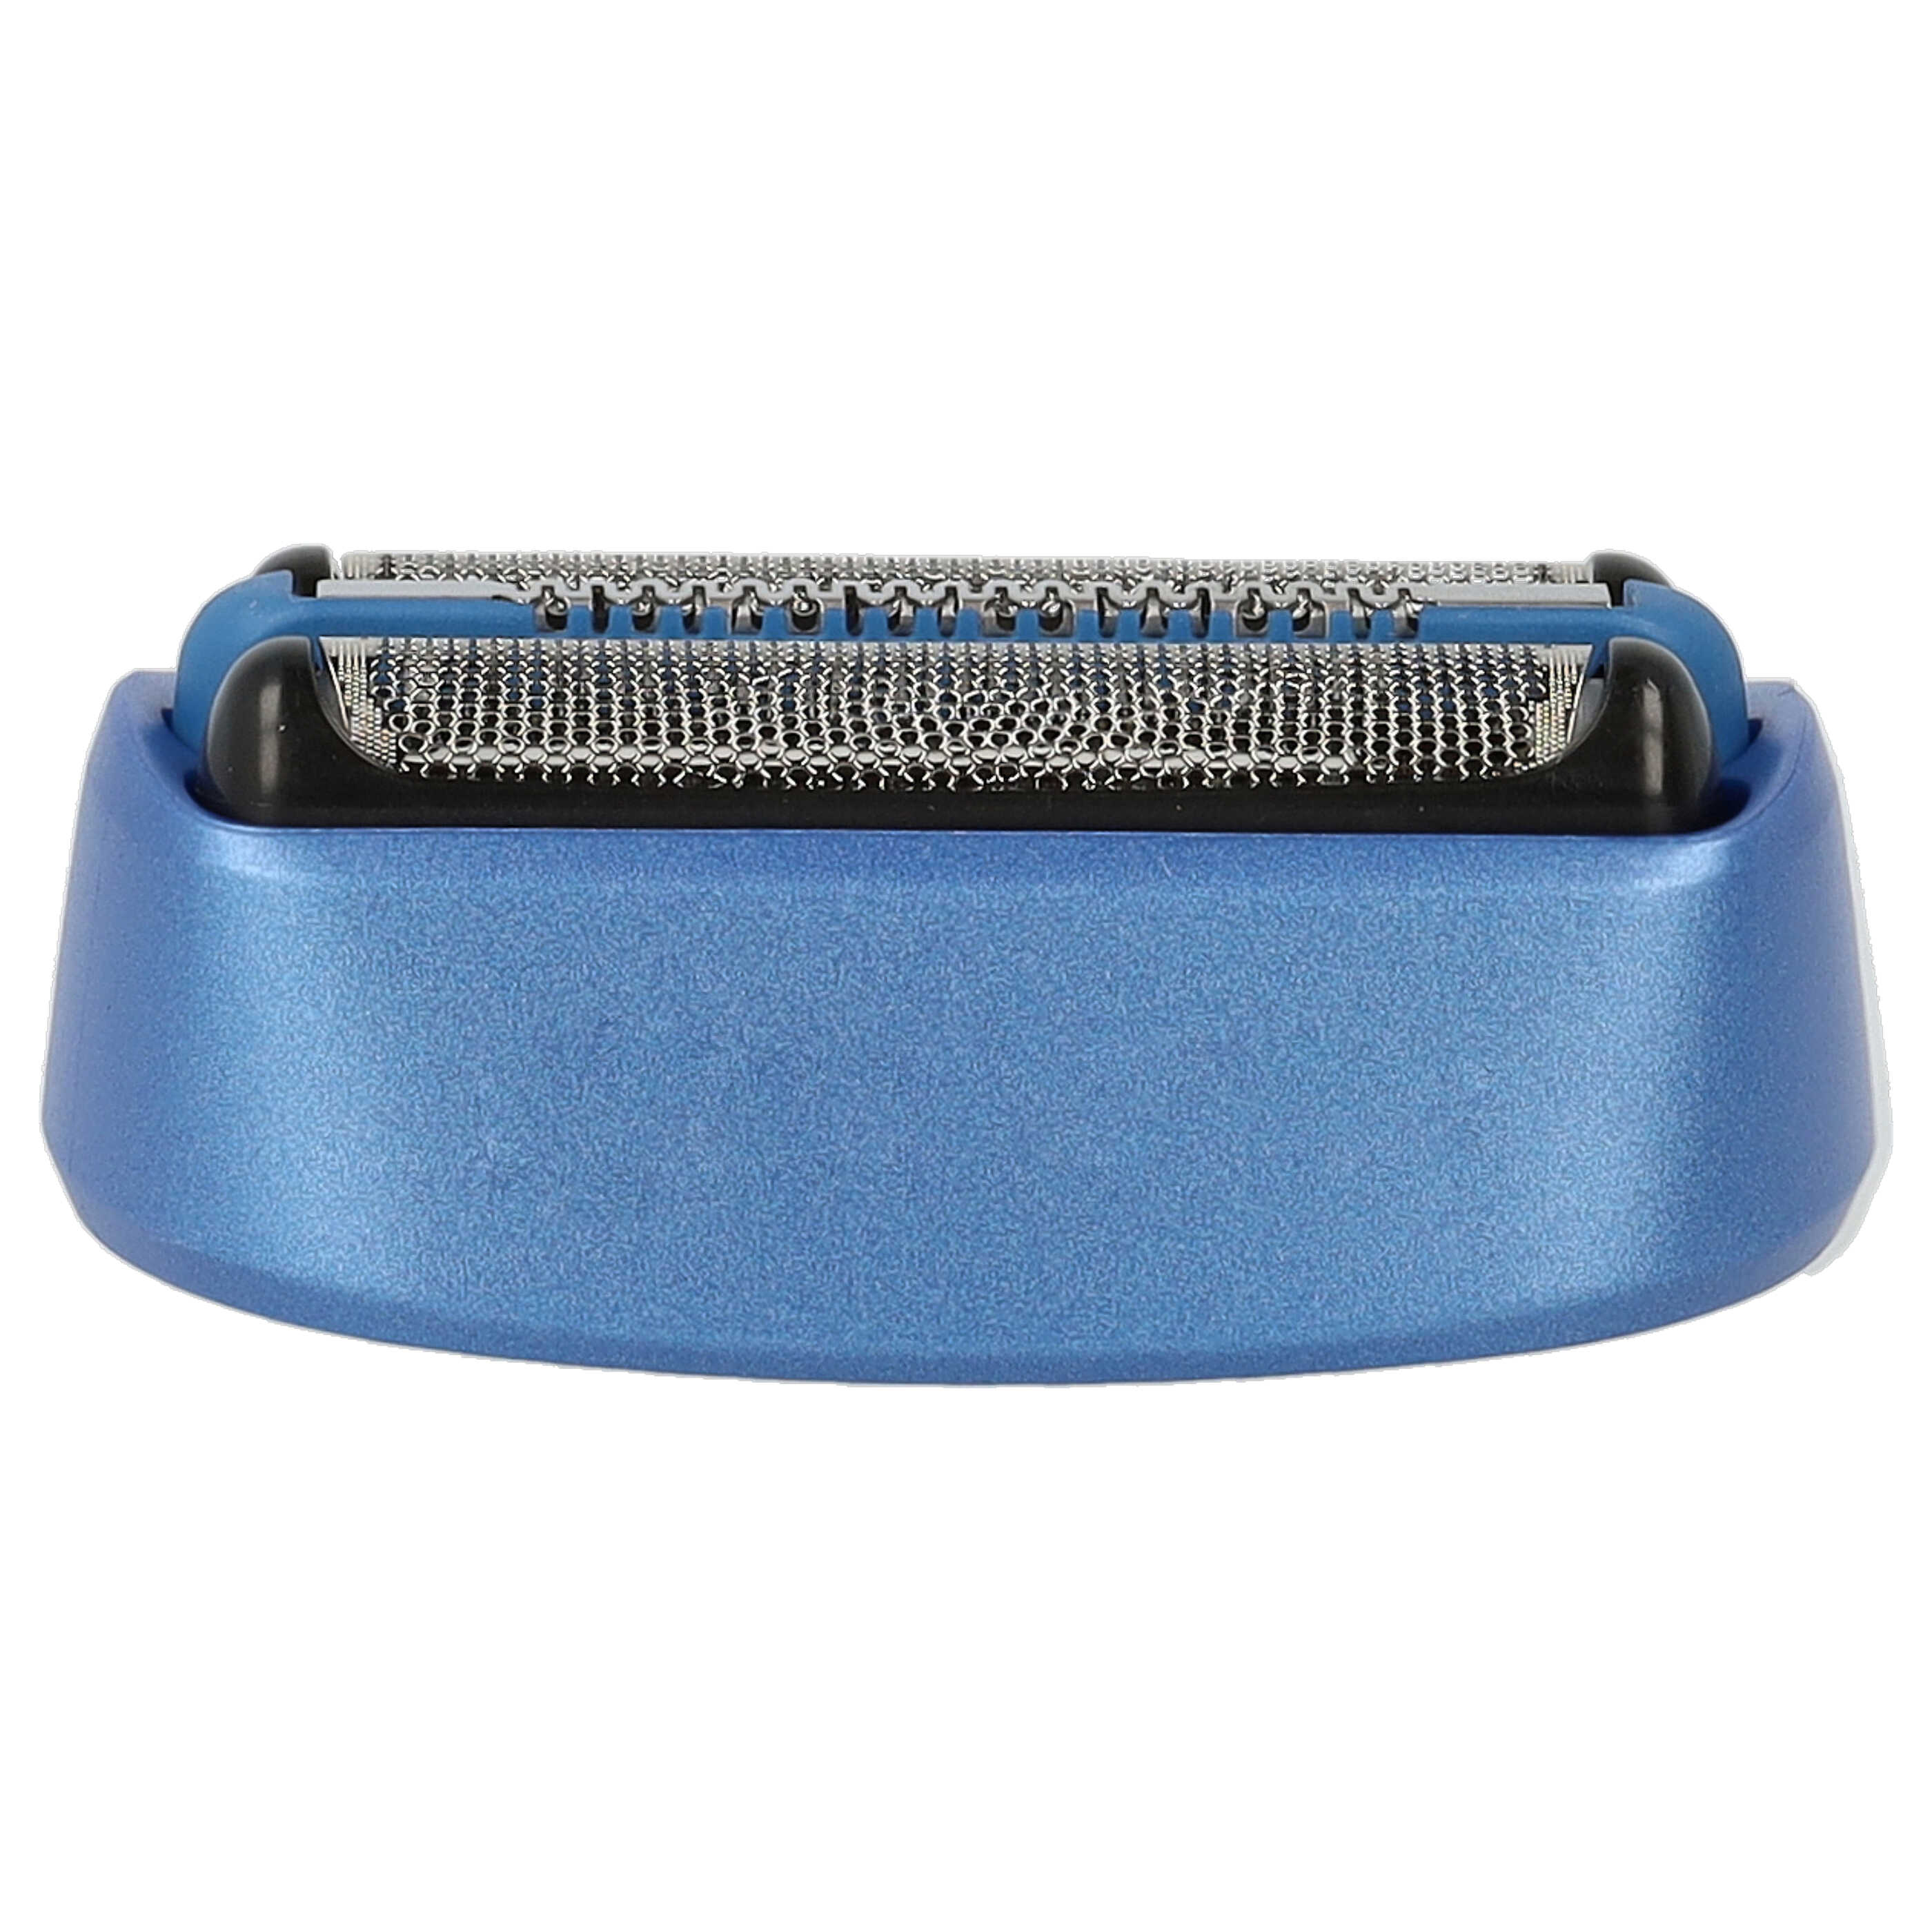 2x Shaving Heads replaces Braun 40B for BraunElectric Razor, black / blue